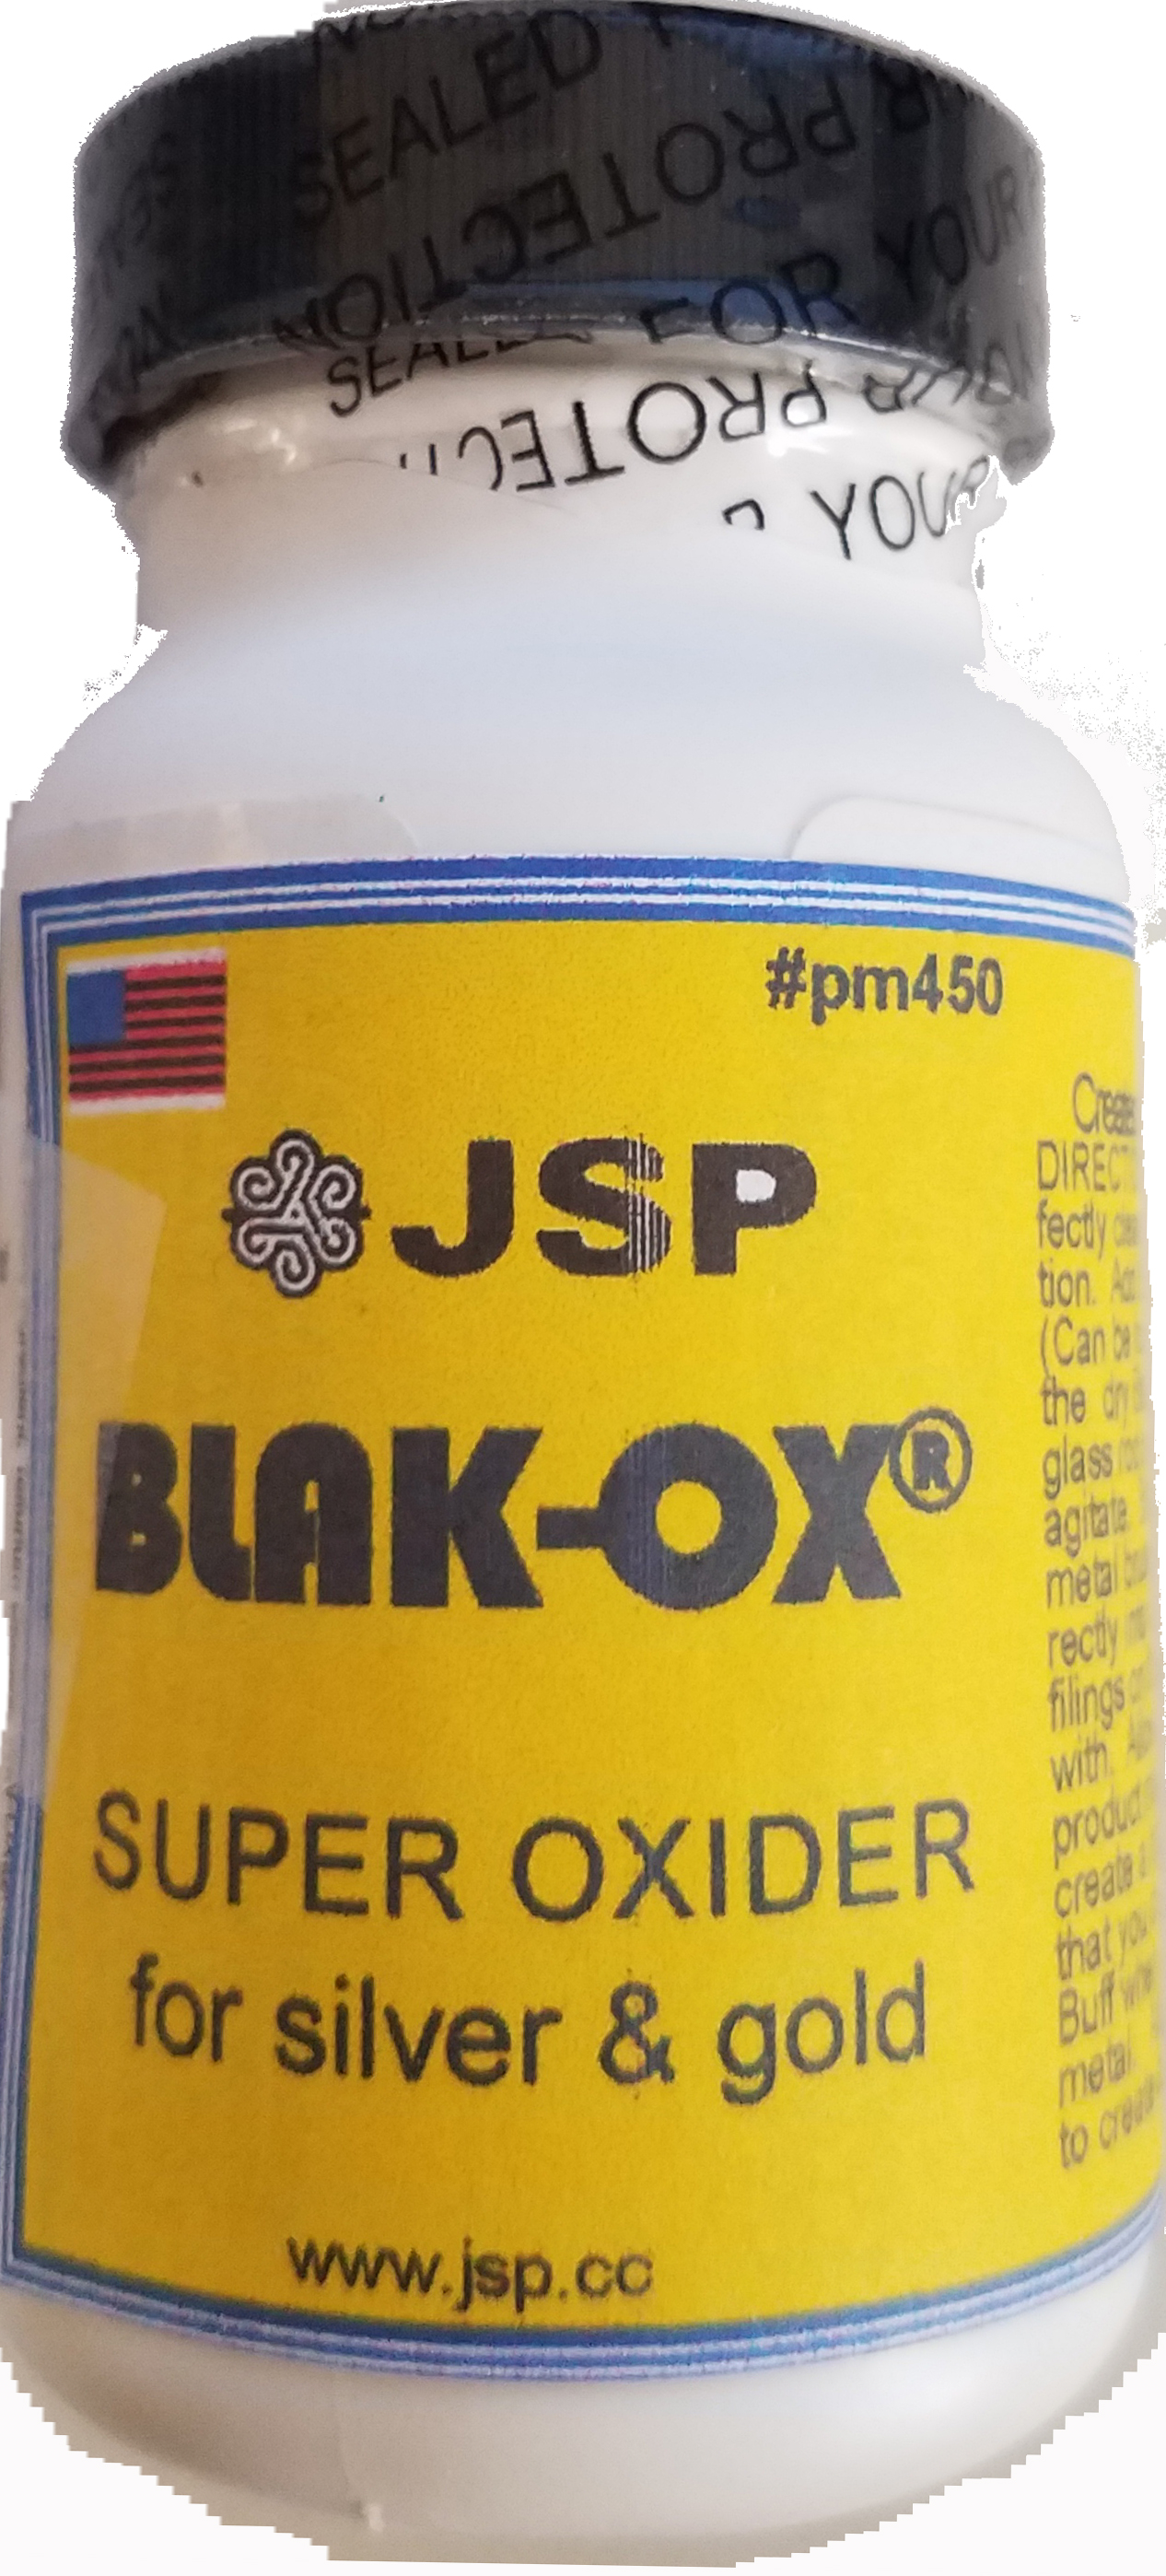 BLAK-OX® silver/gold oxidizer (safe to ship) 3 oz